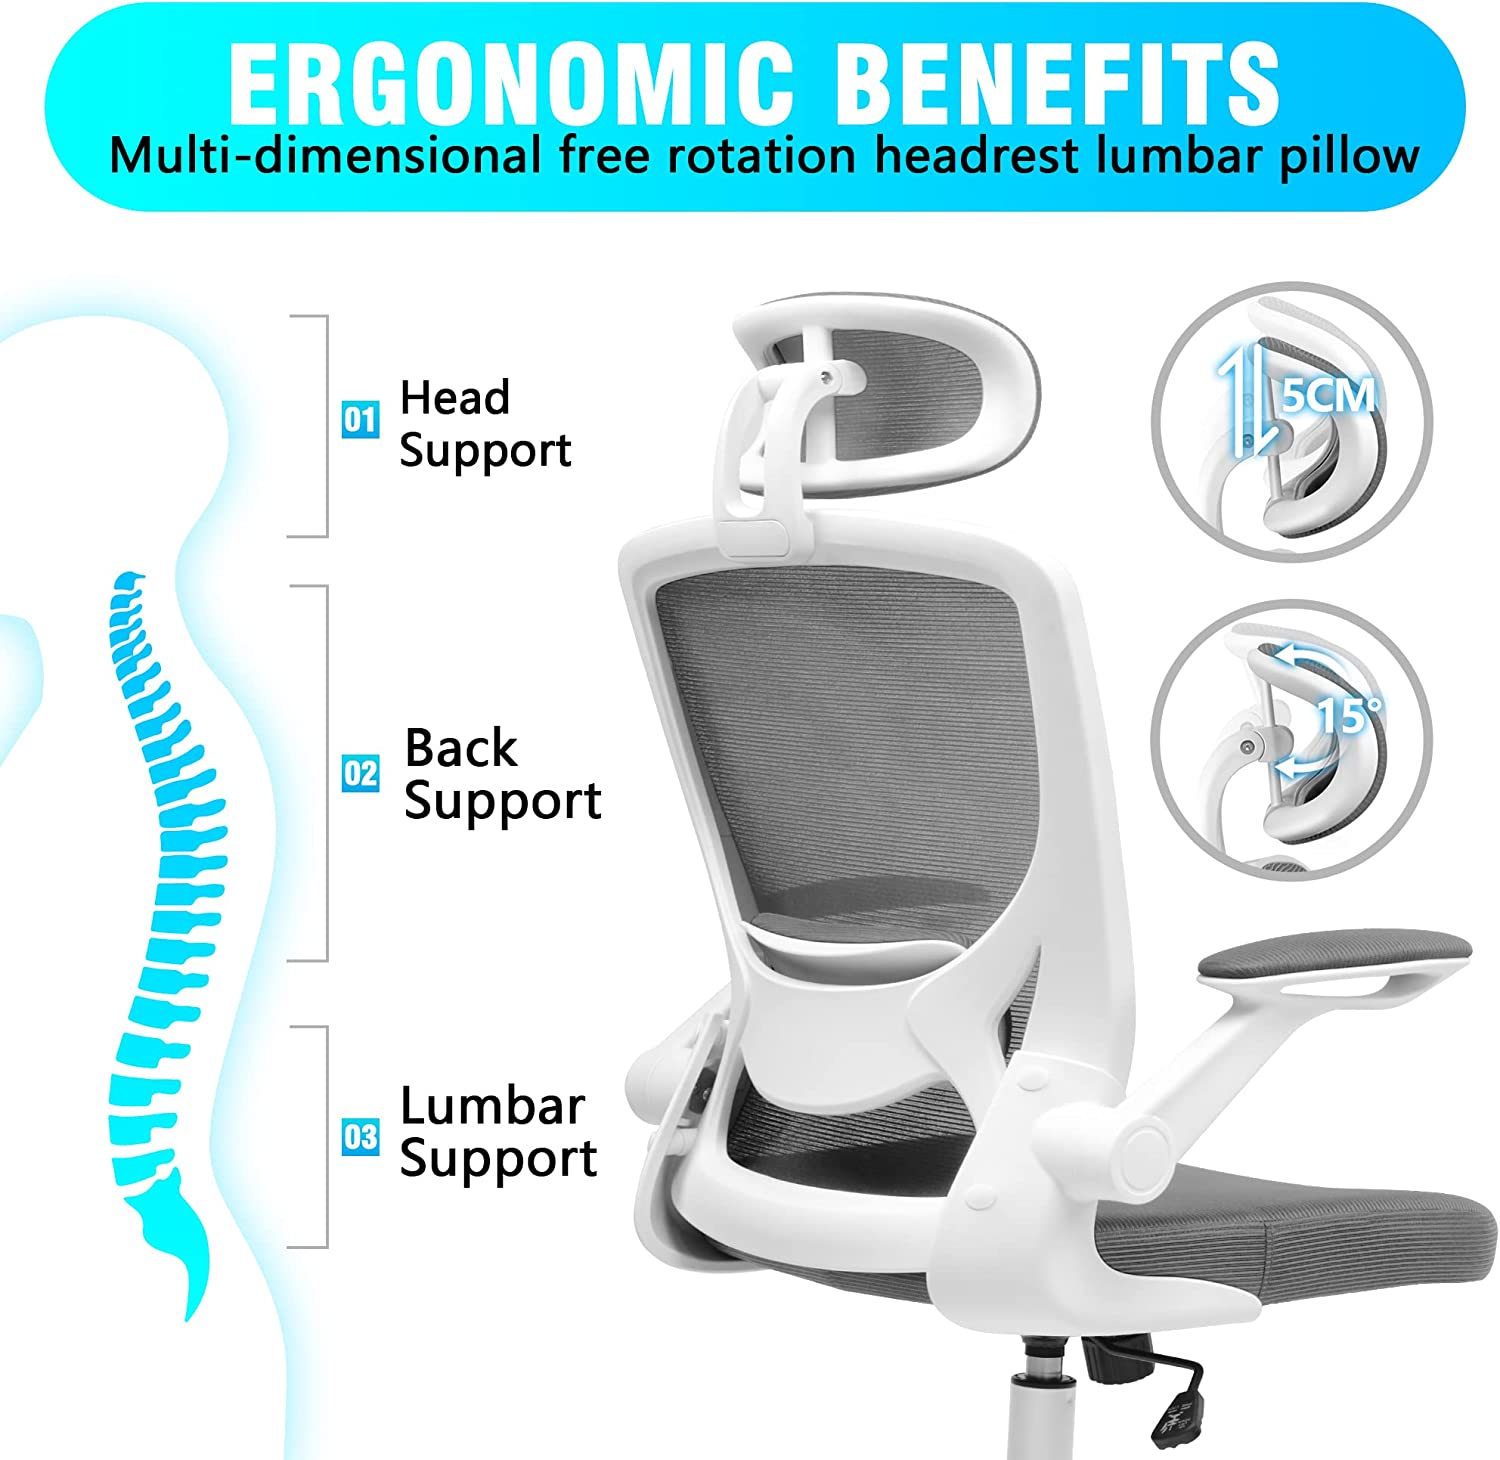 Ergonomic Office Chair Breathable Mesh Desk Chair